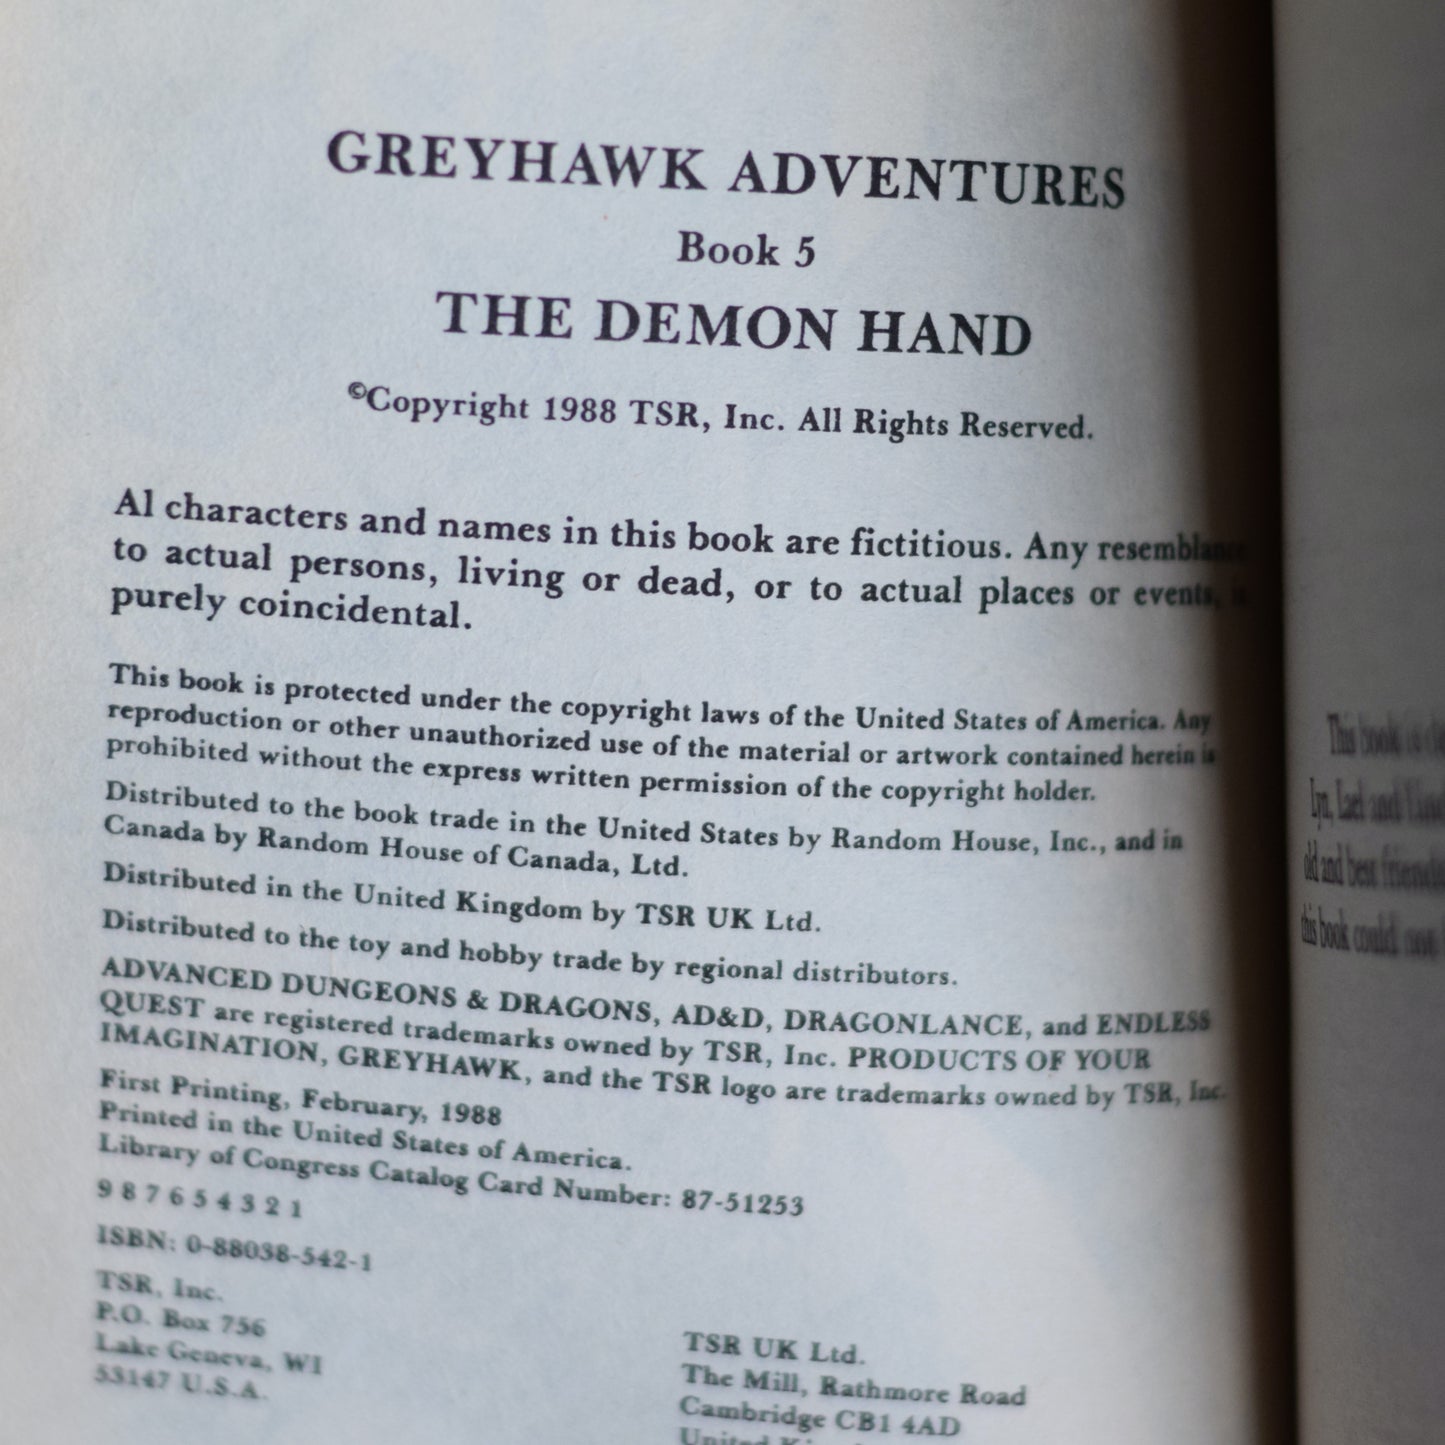 Vintage Dungeons & Dragons Paperback: Rose Estes - The Demon Hand, Greyhawk Adventures FIRST PRINTING